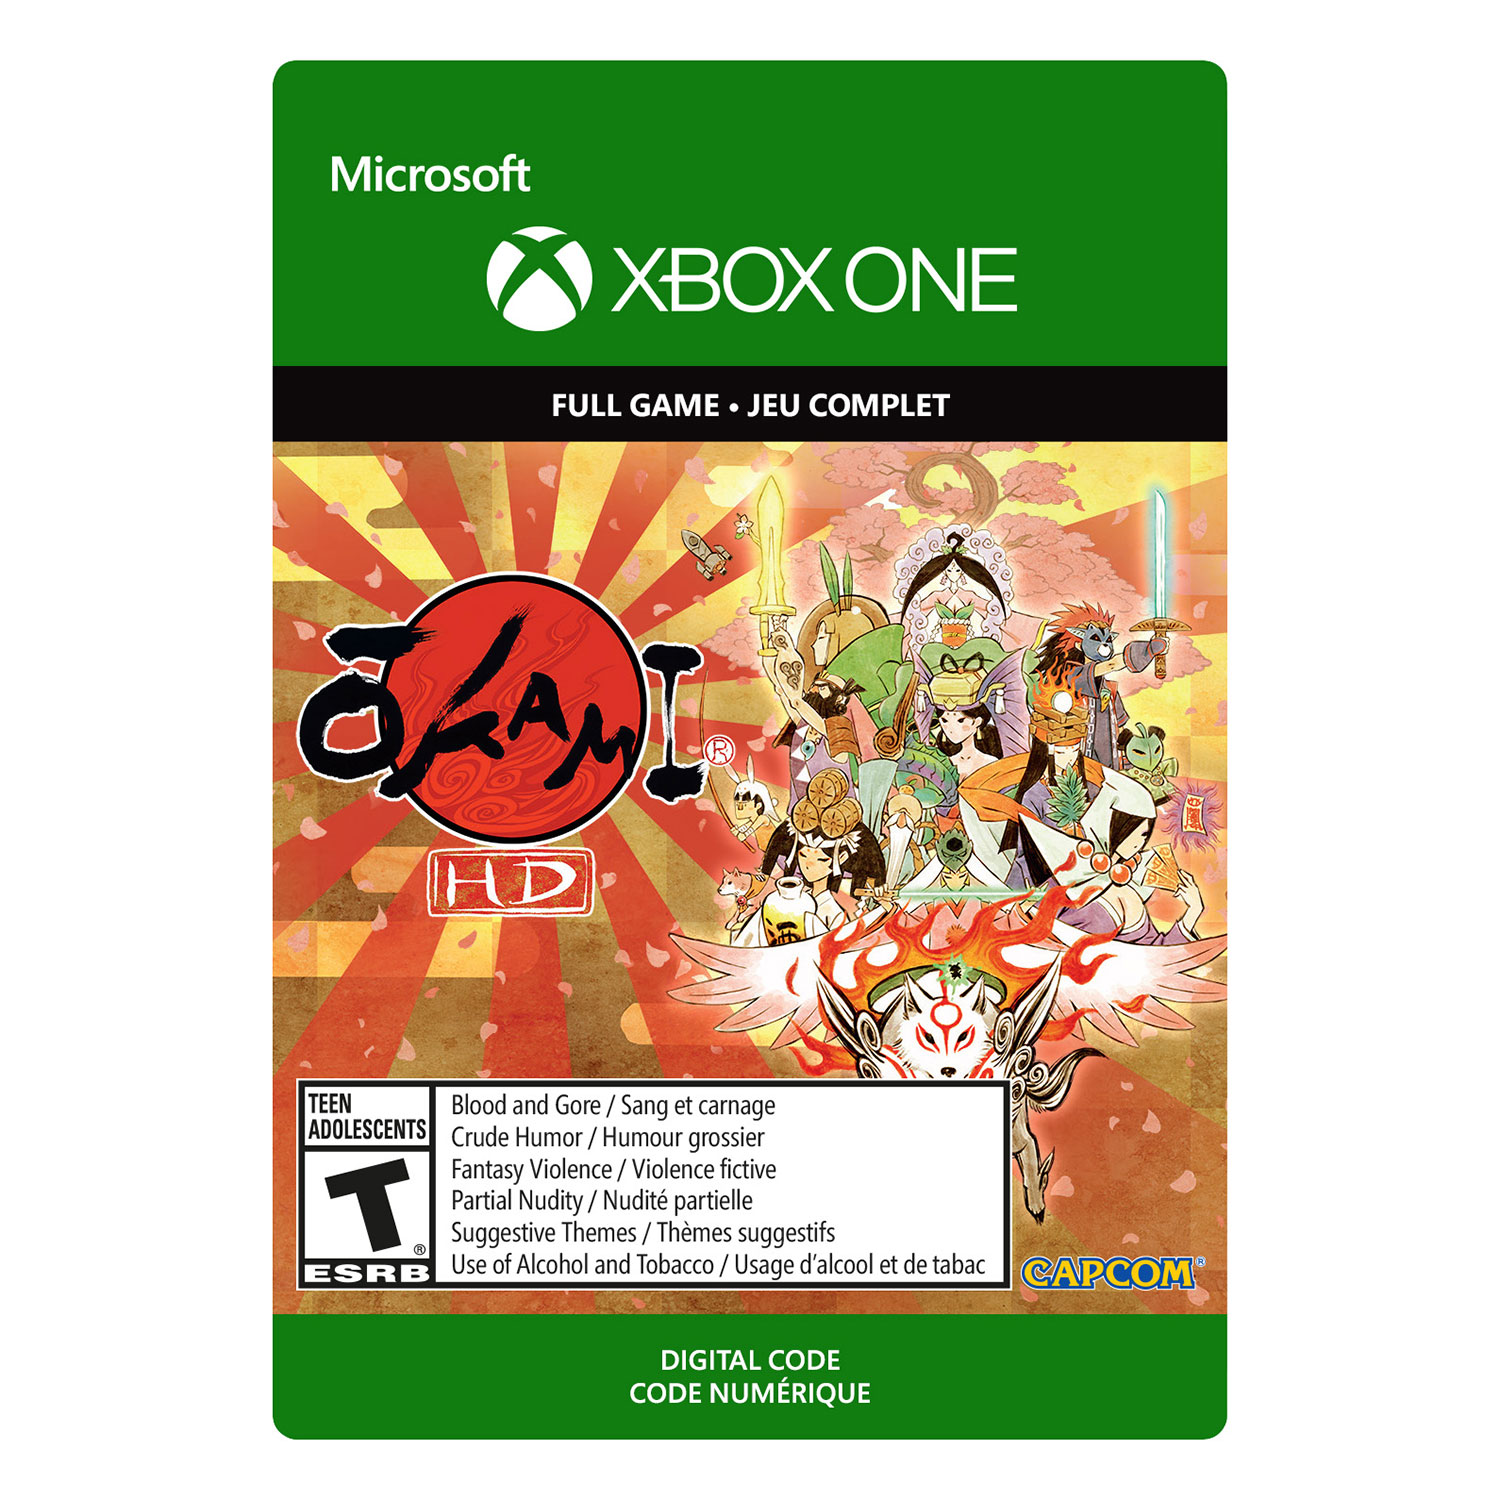 Okami HD (Xbox One) - Digital Download